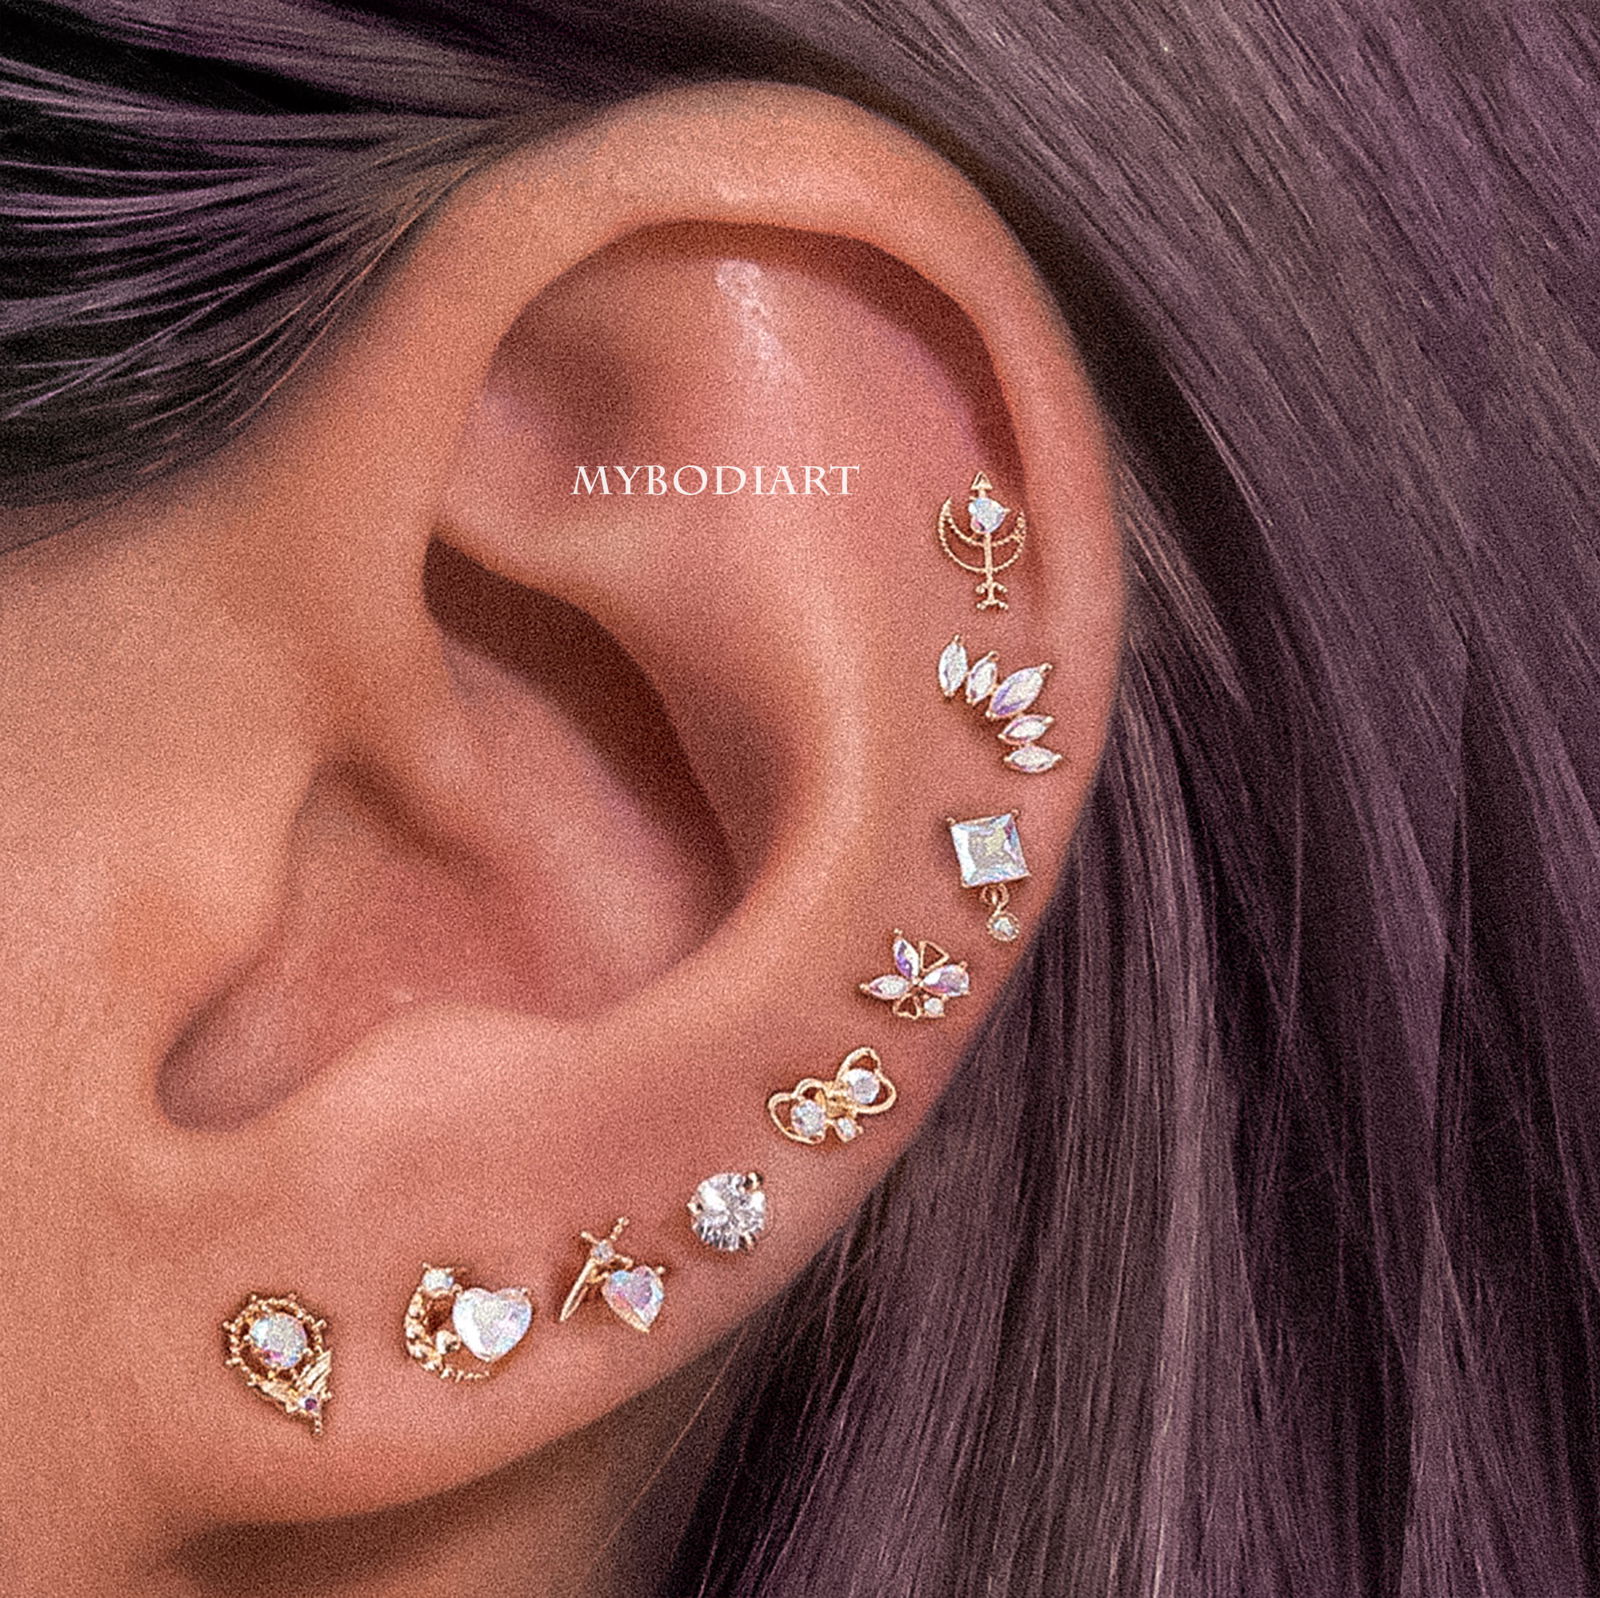 Swarovski Crystal Nose Piercing Stud at MyBodiArt, Nose Bone Jewelry